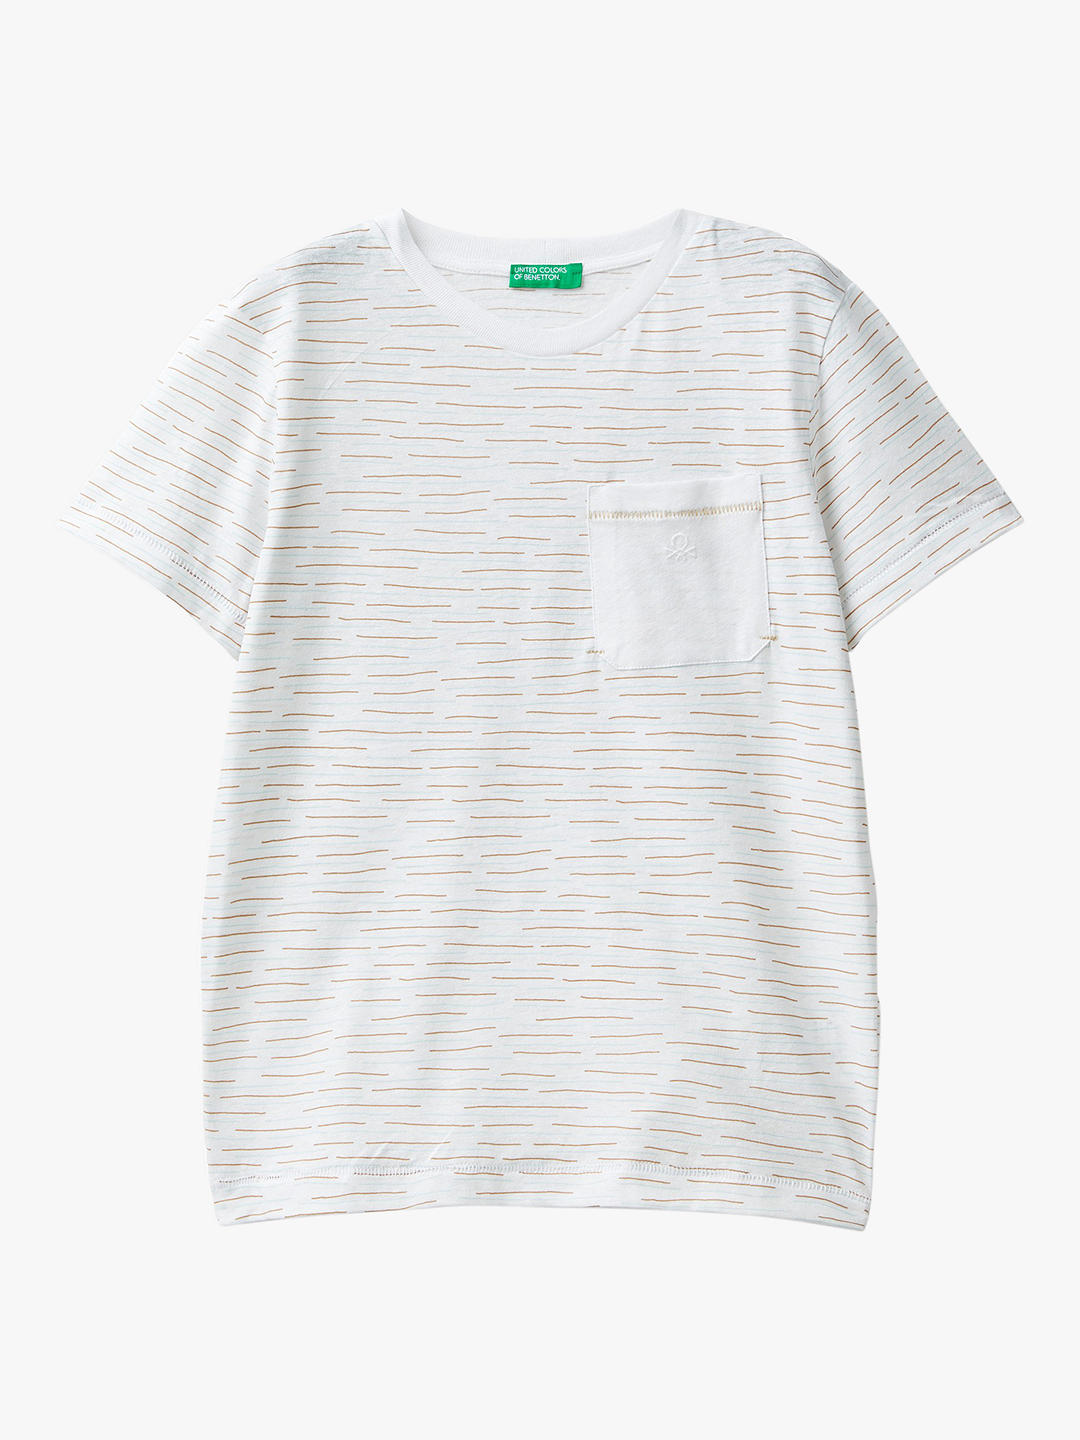 Benetton Kids' Abstact Stripe Pocket Detail Short Sleeve T-Shirt, Cream/Multi